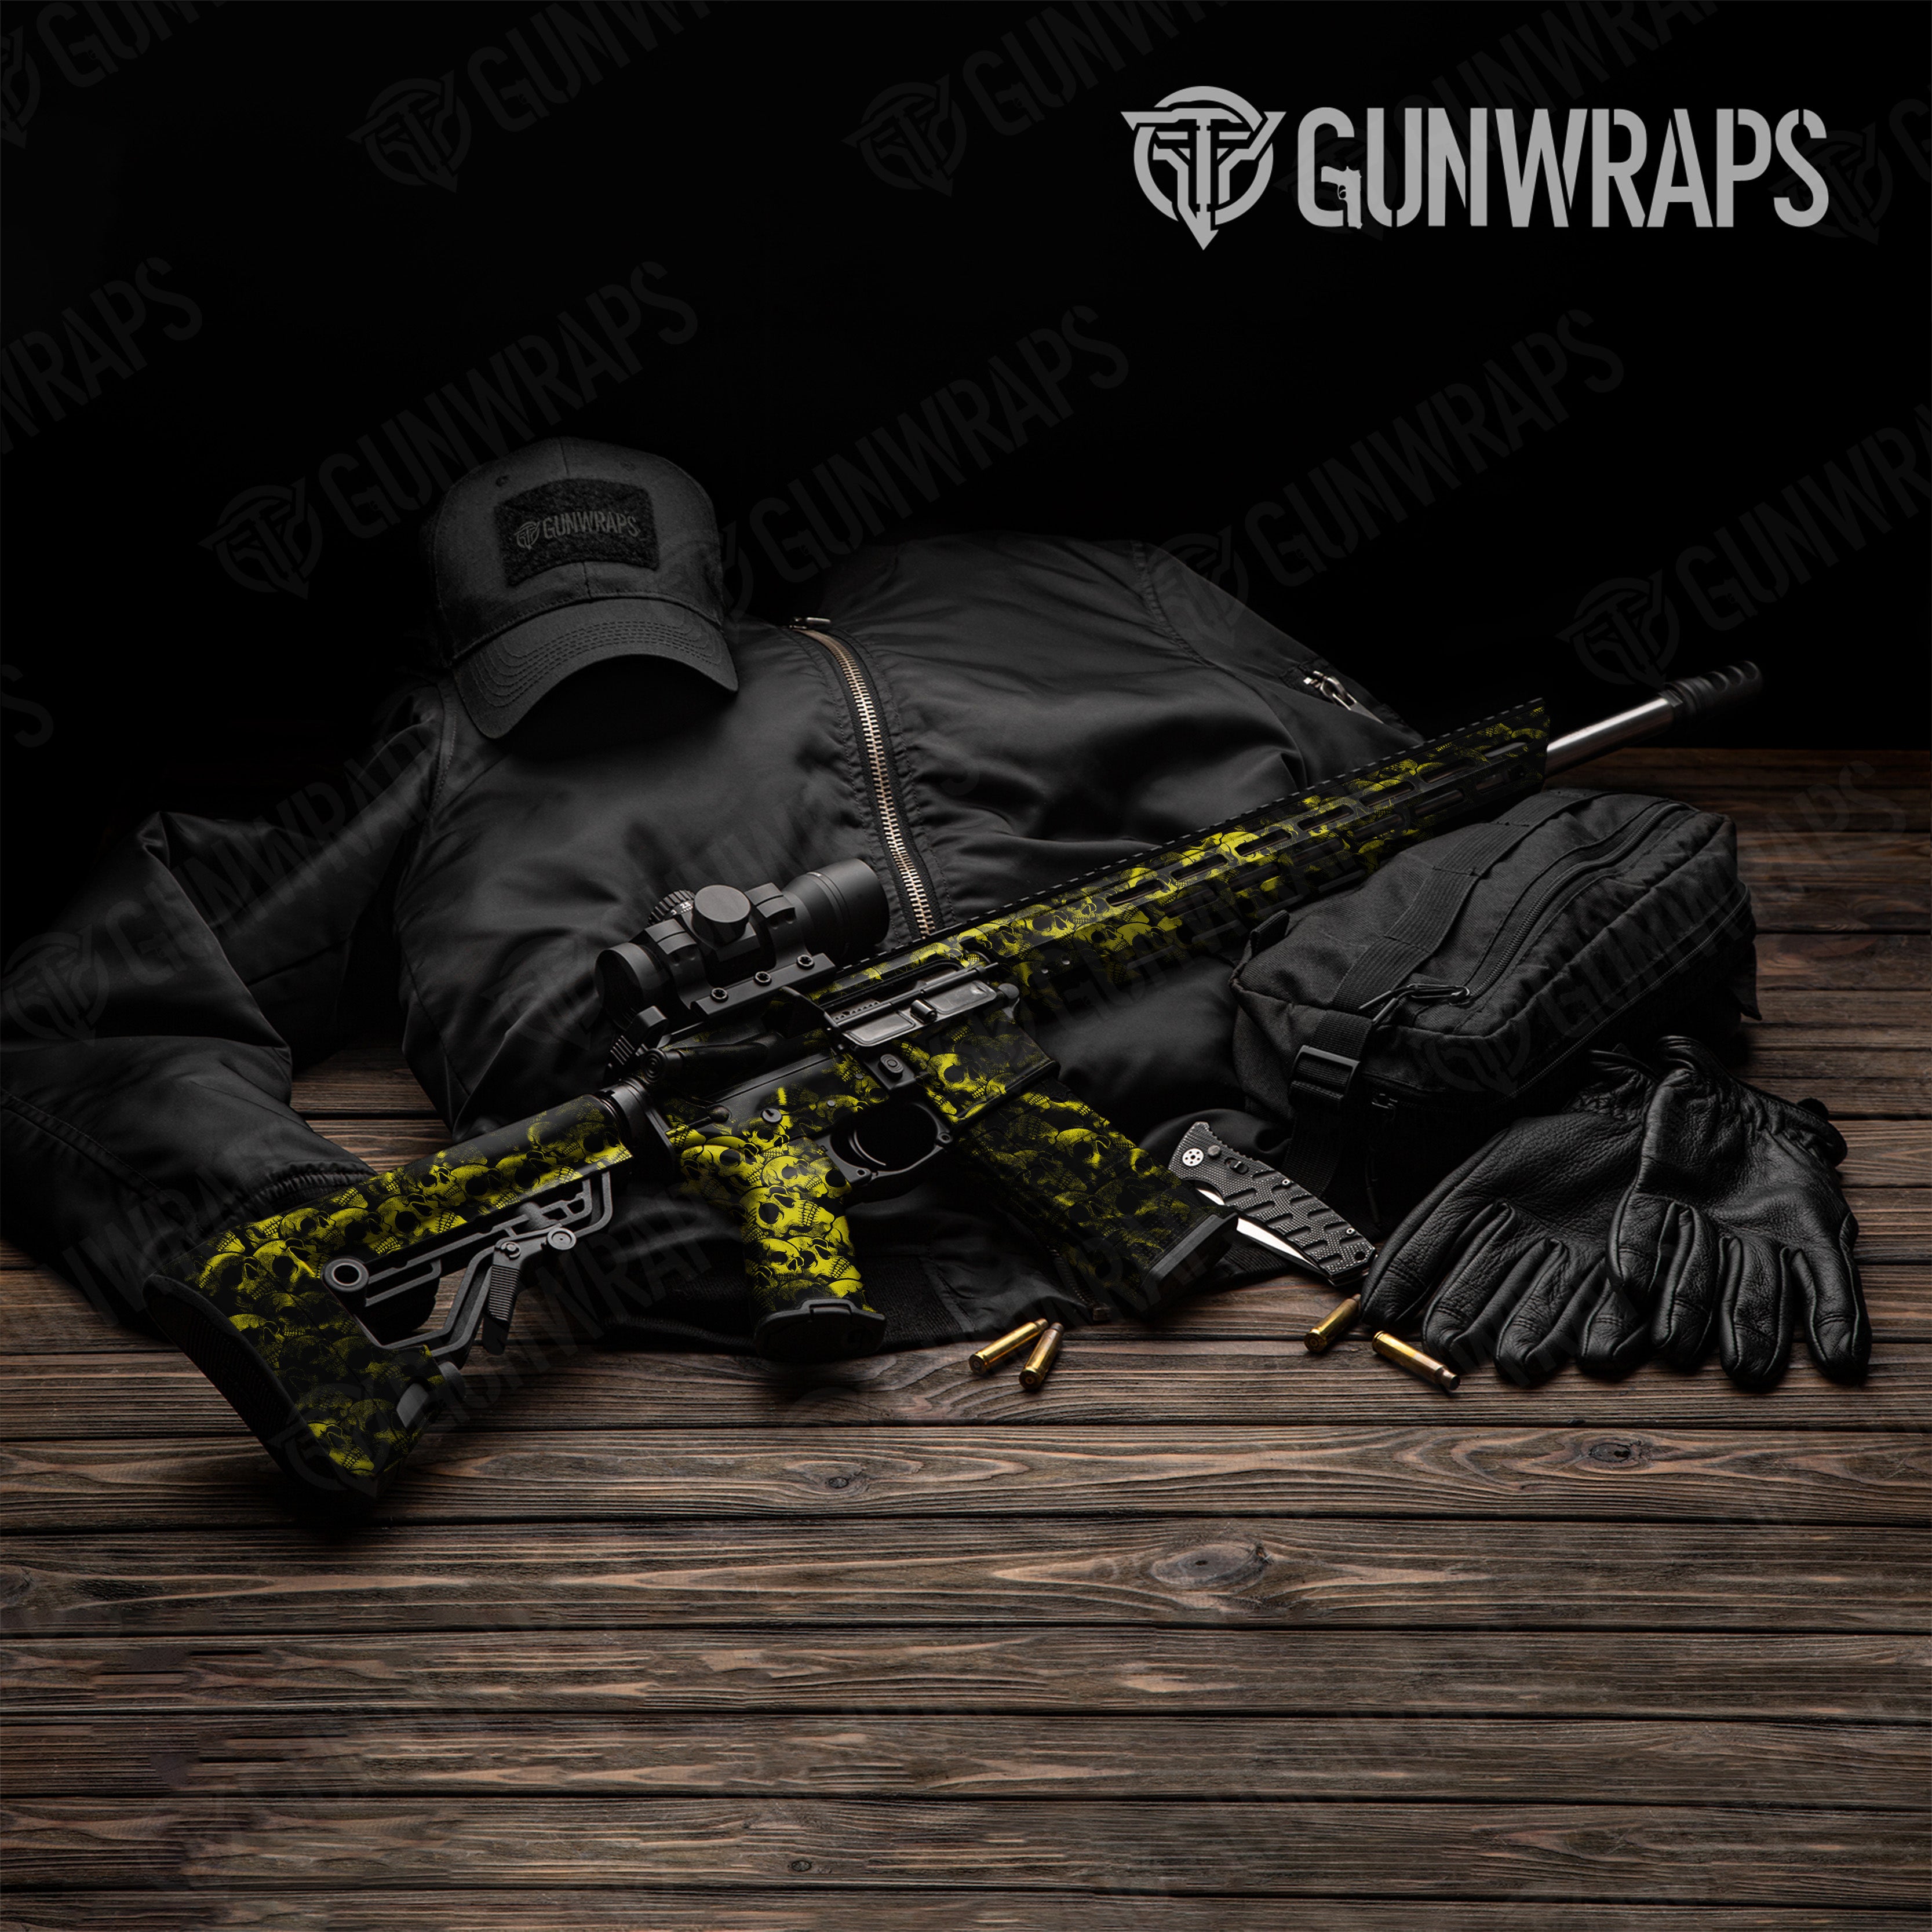 AR 15 Skull Yellow Gun Skin Pattern